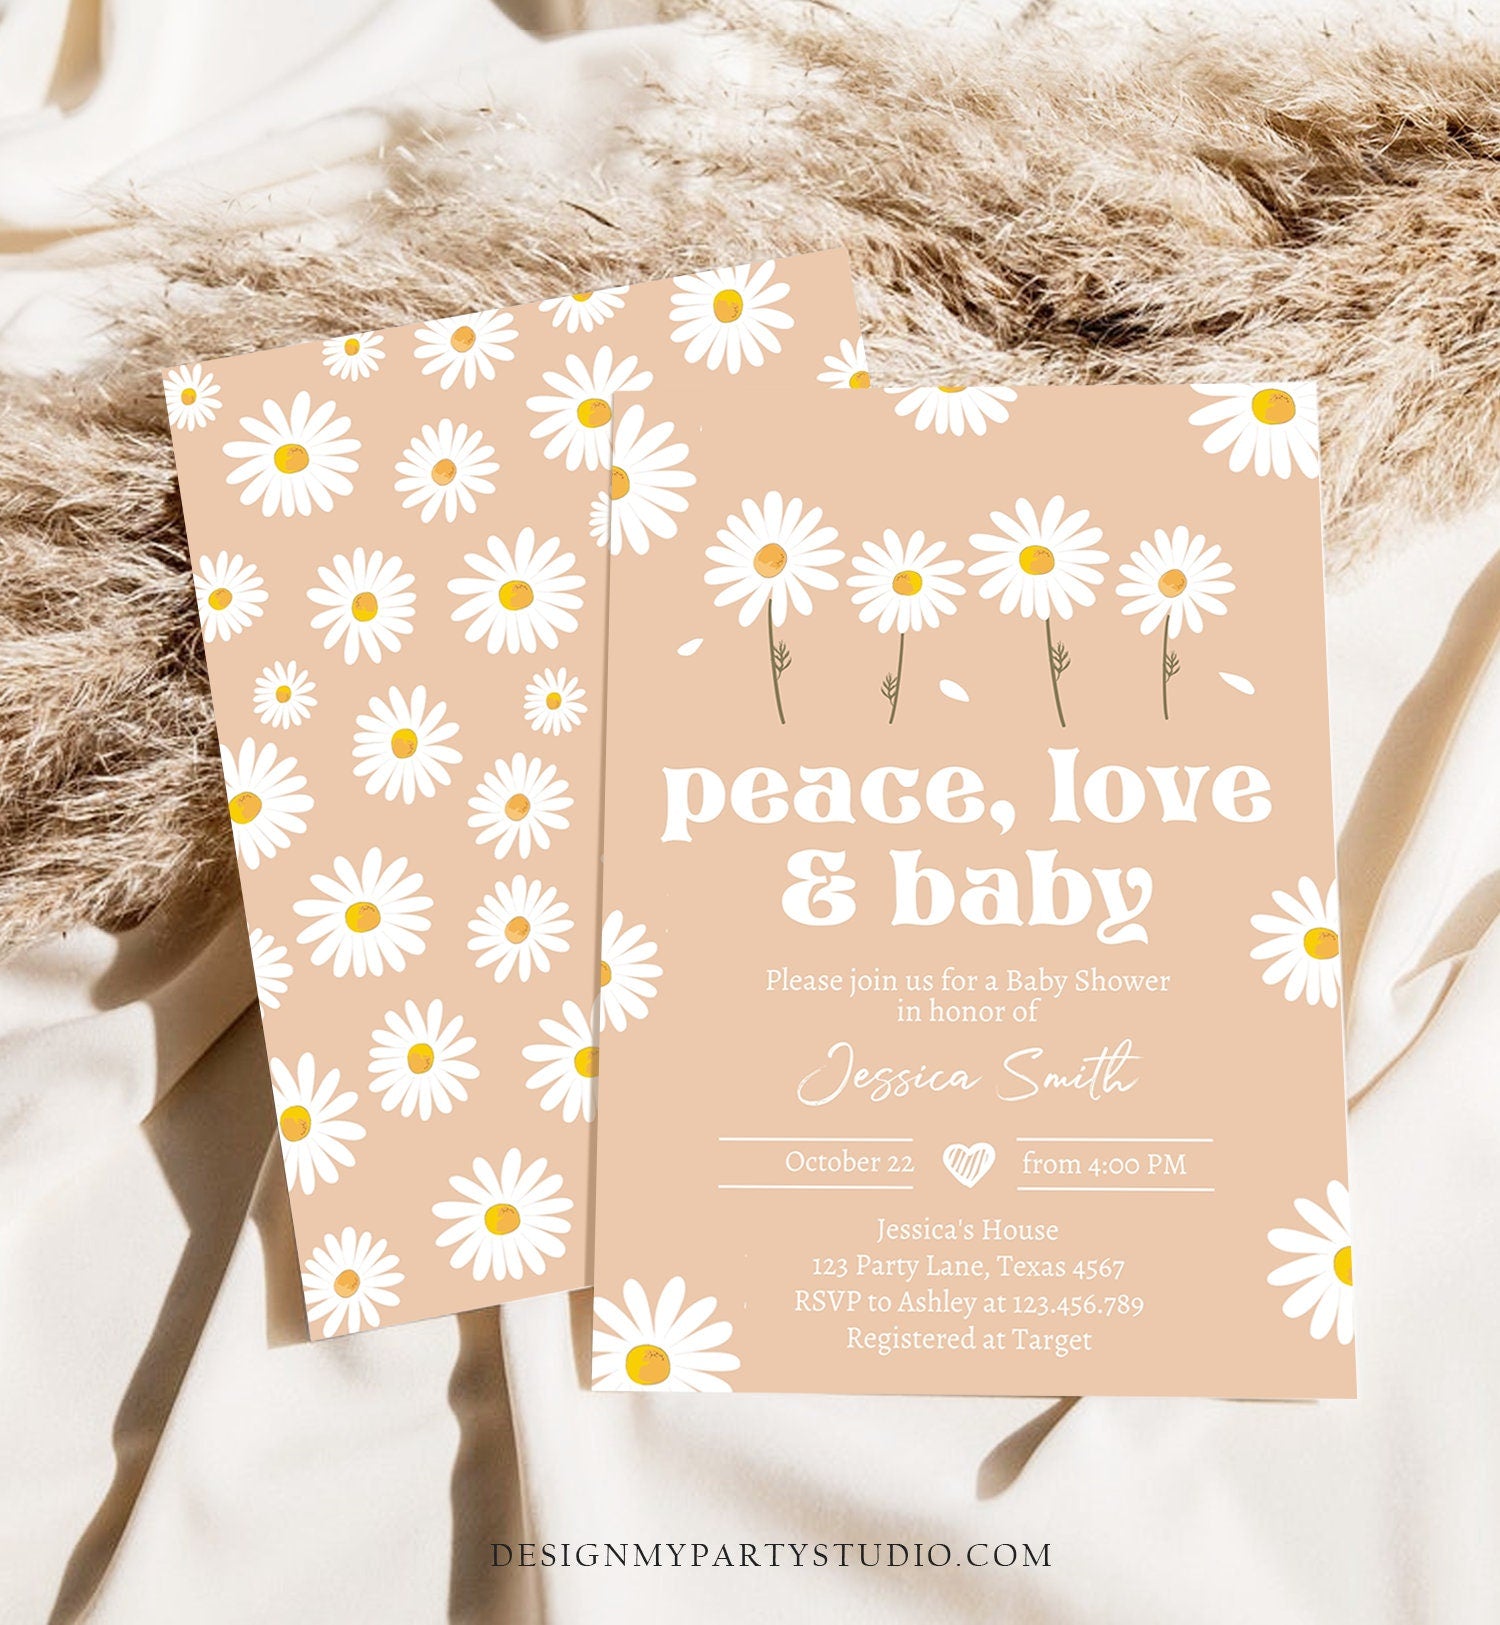 Editable Peace Love and Baby Shower Invitation Daisy Invitation Floral Bohemian Boho Hippie Download Printable Template Corjl Digital 0410